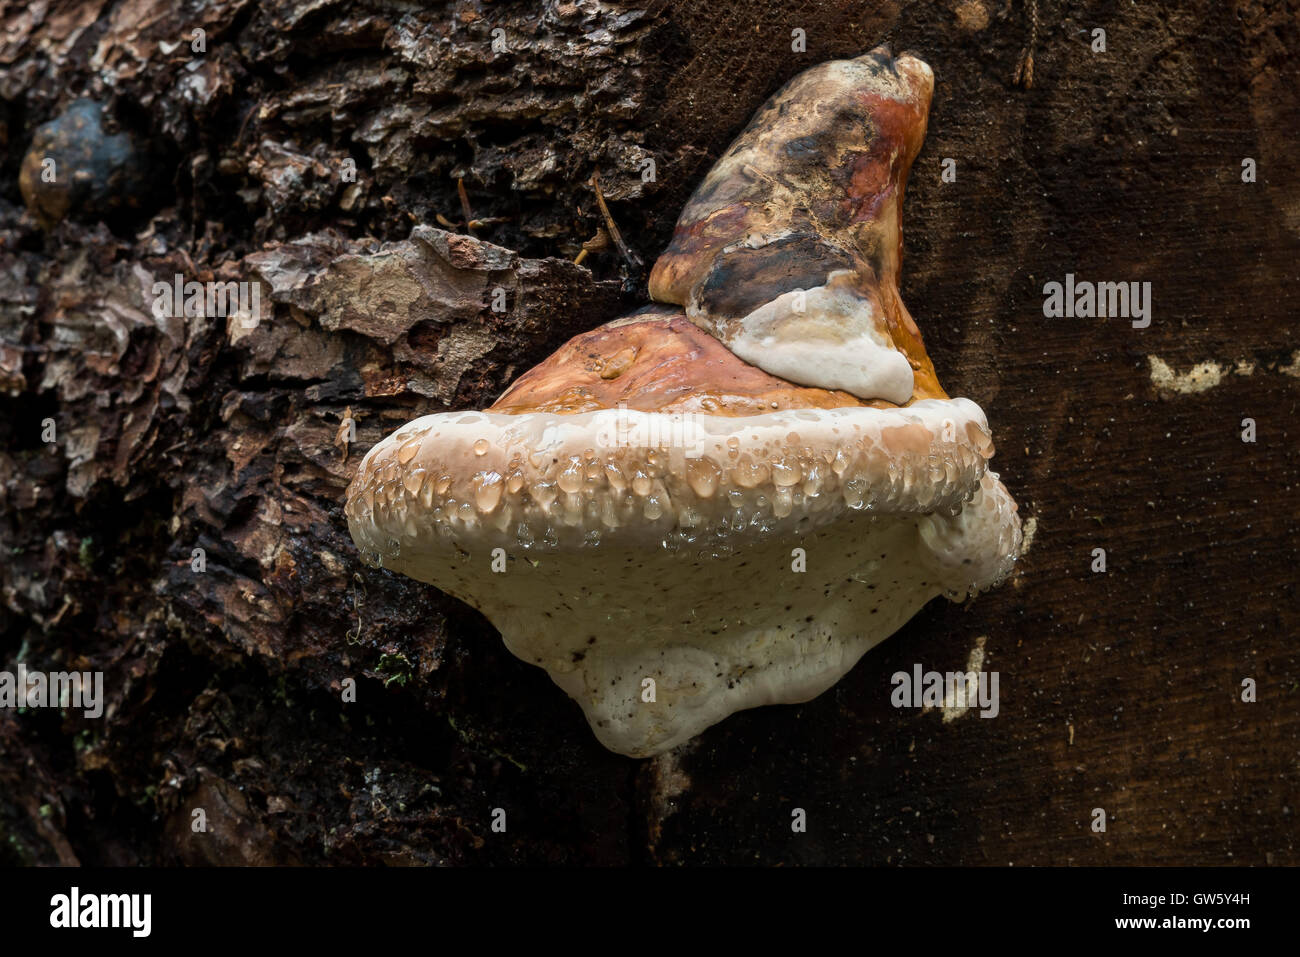 red belt conk tree stump forest mushroom fungi Stock Photo